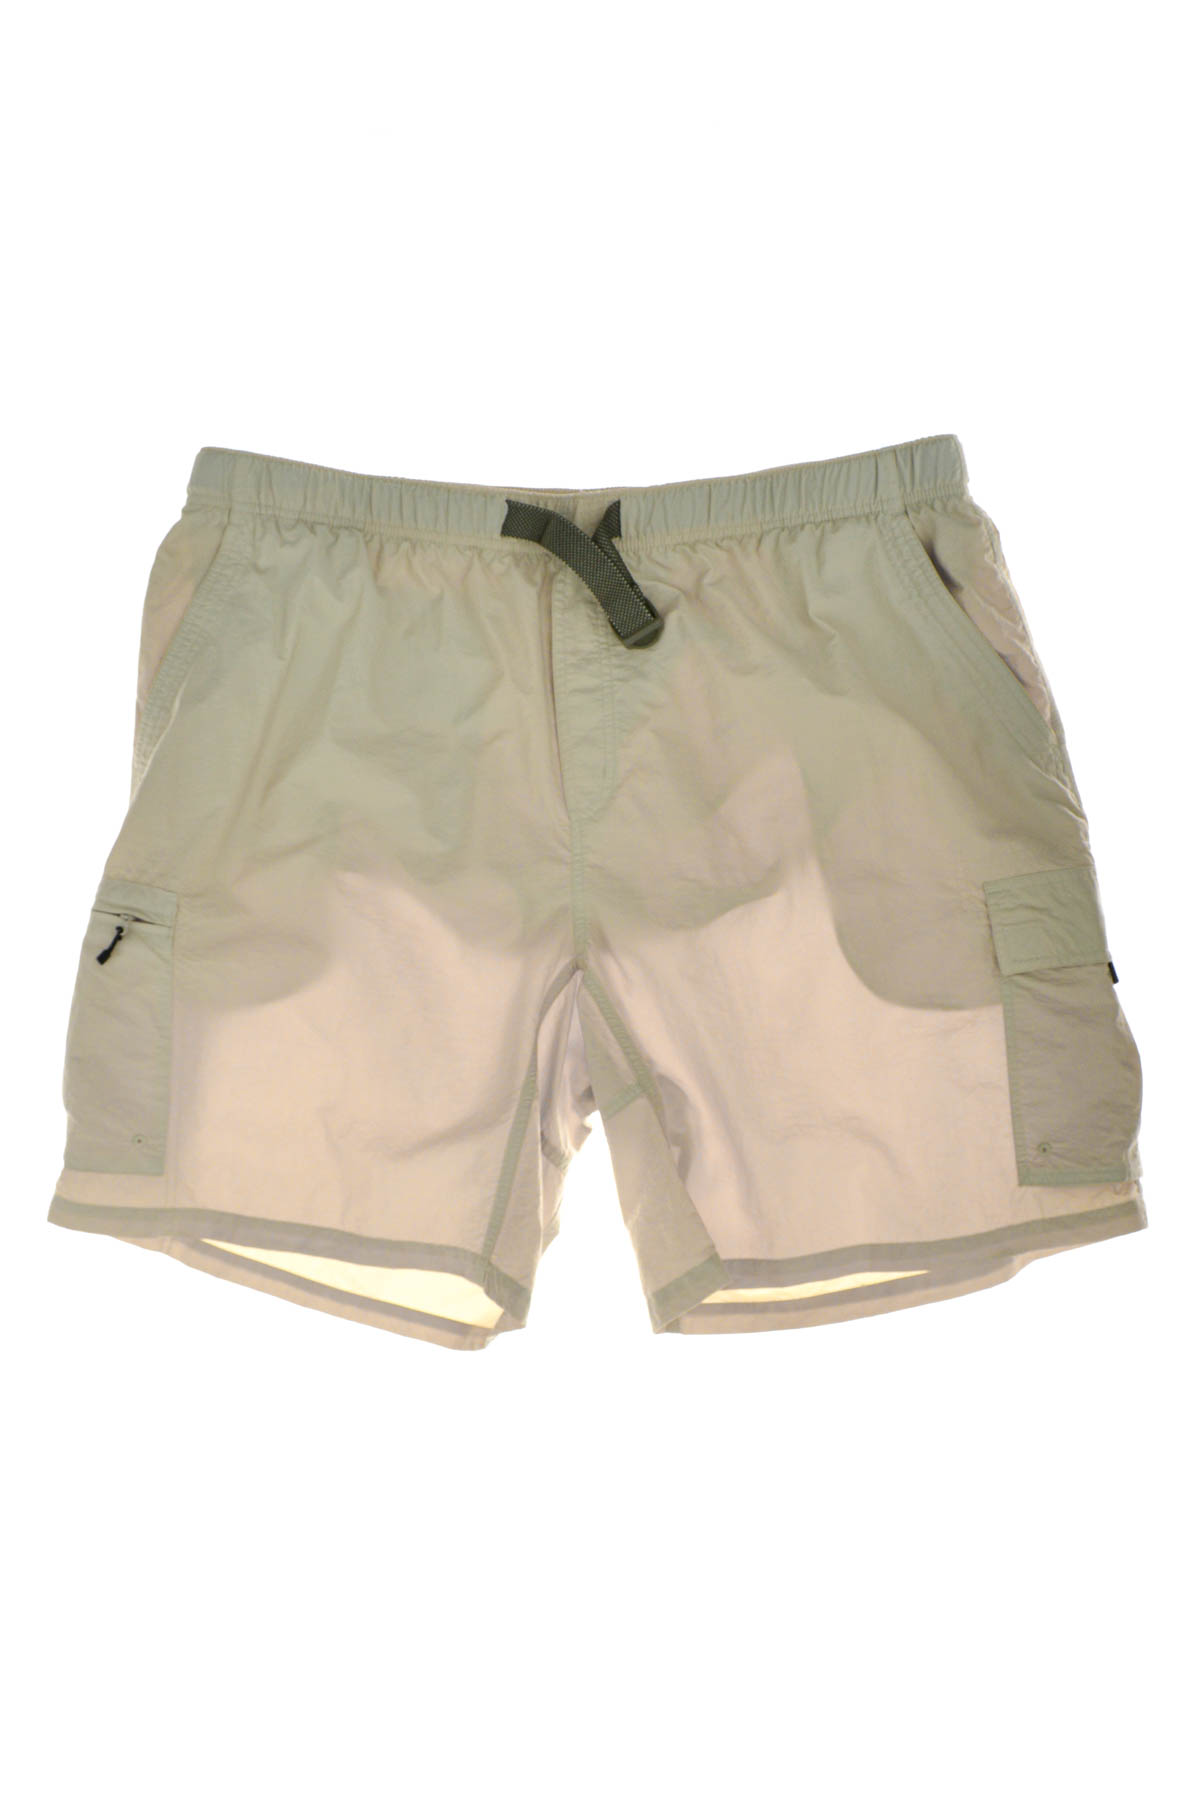 Men's shorts - Columbia - 0